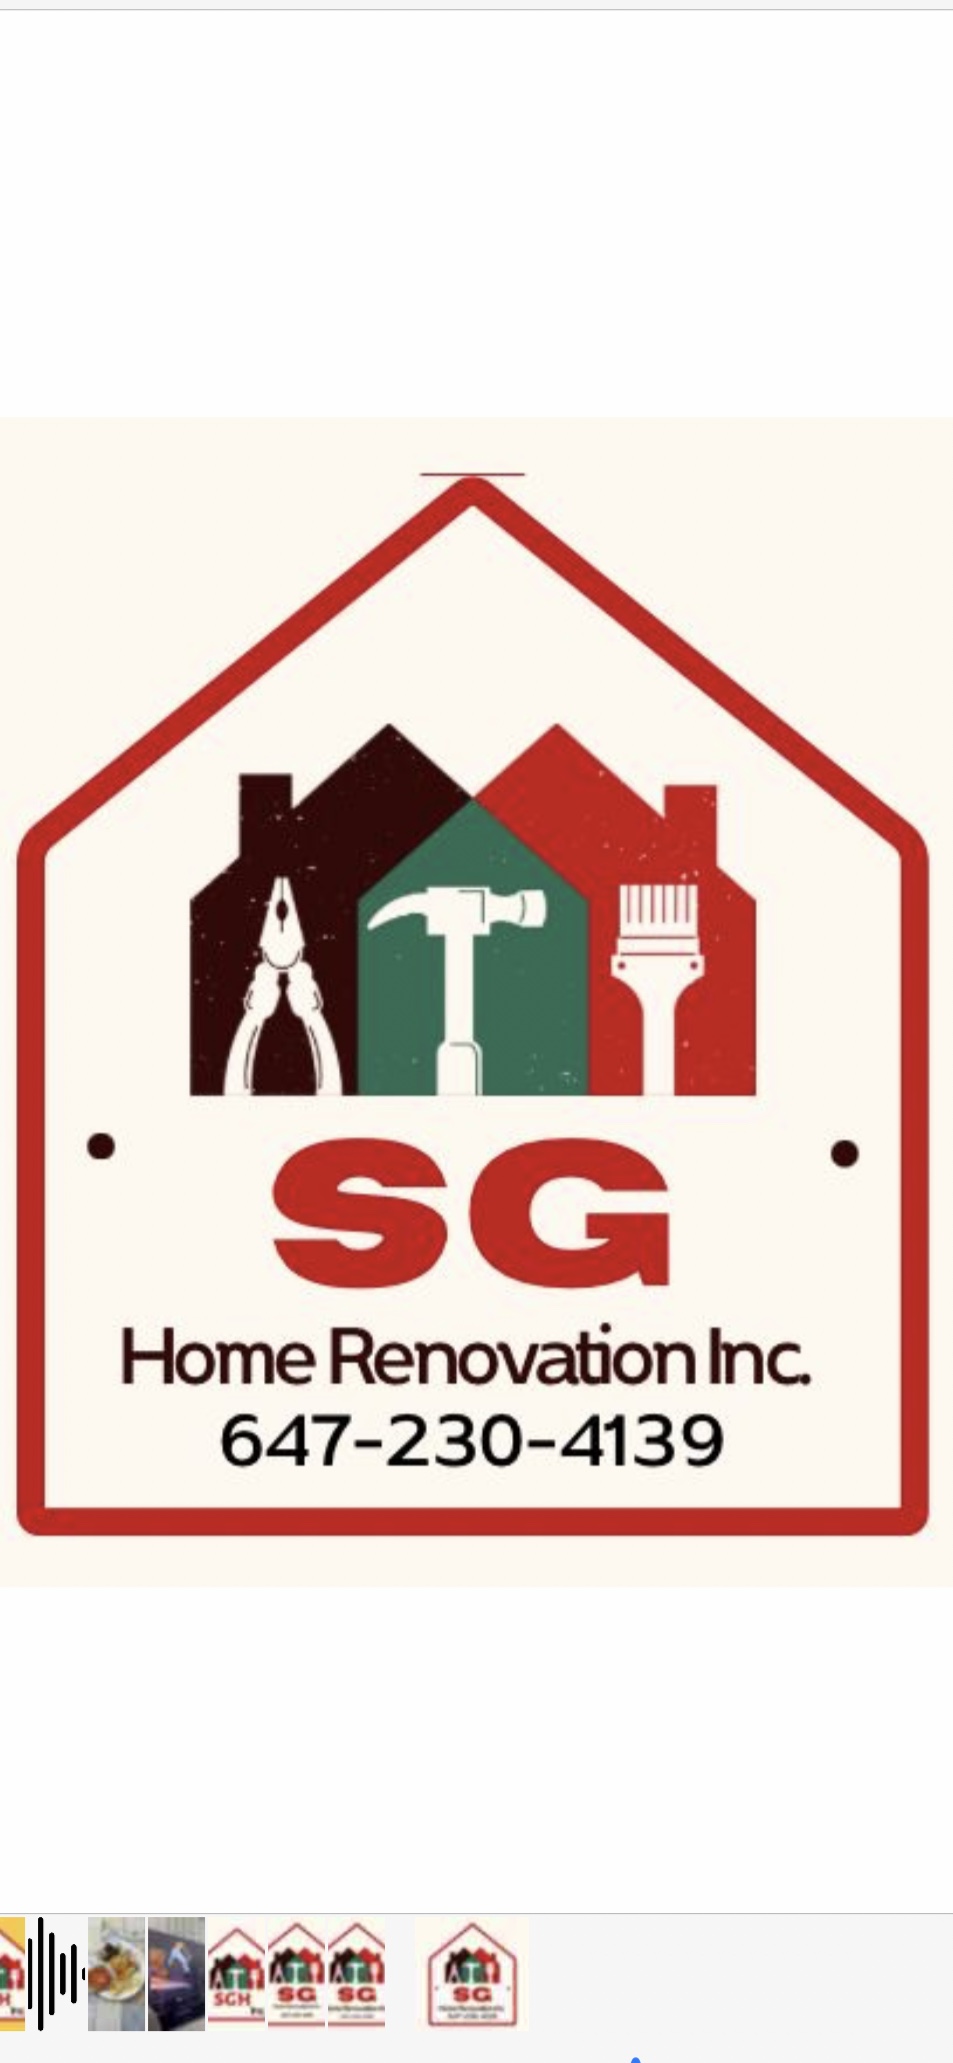 Shan- G Renovation Inc's logo